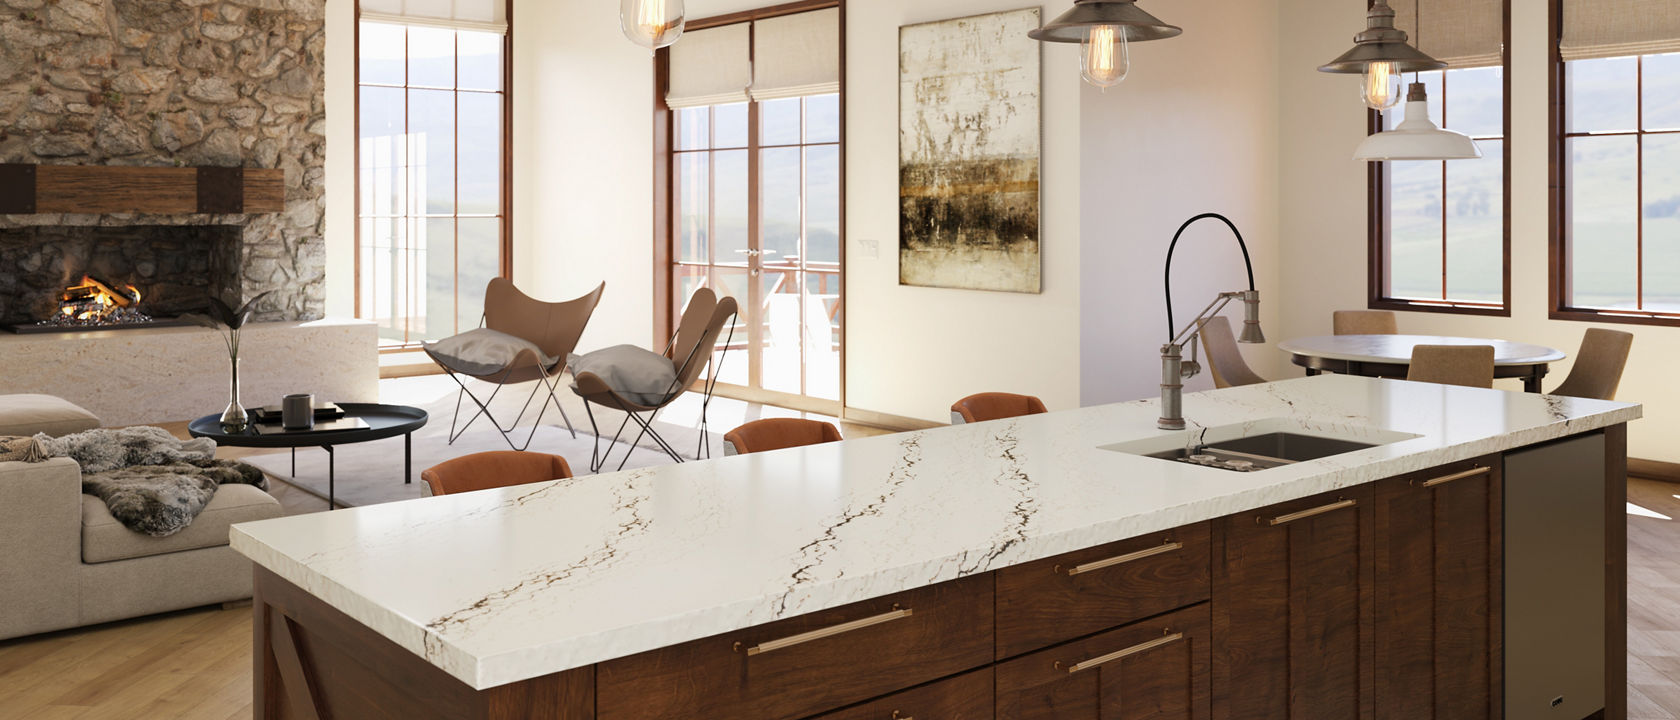 Kitchen island featuring a Cambria Hemsworth quartz countertop.